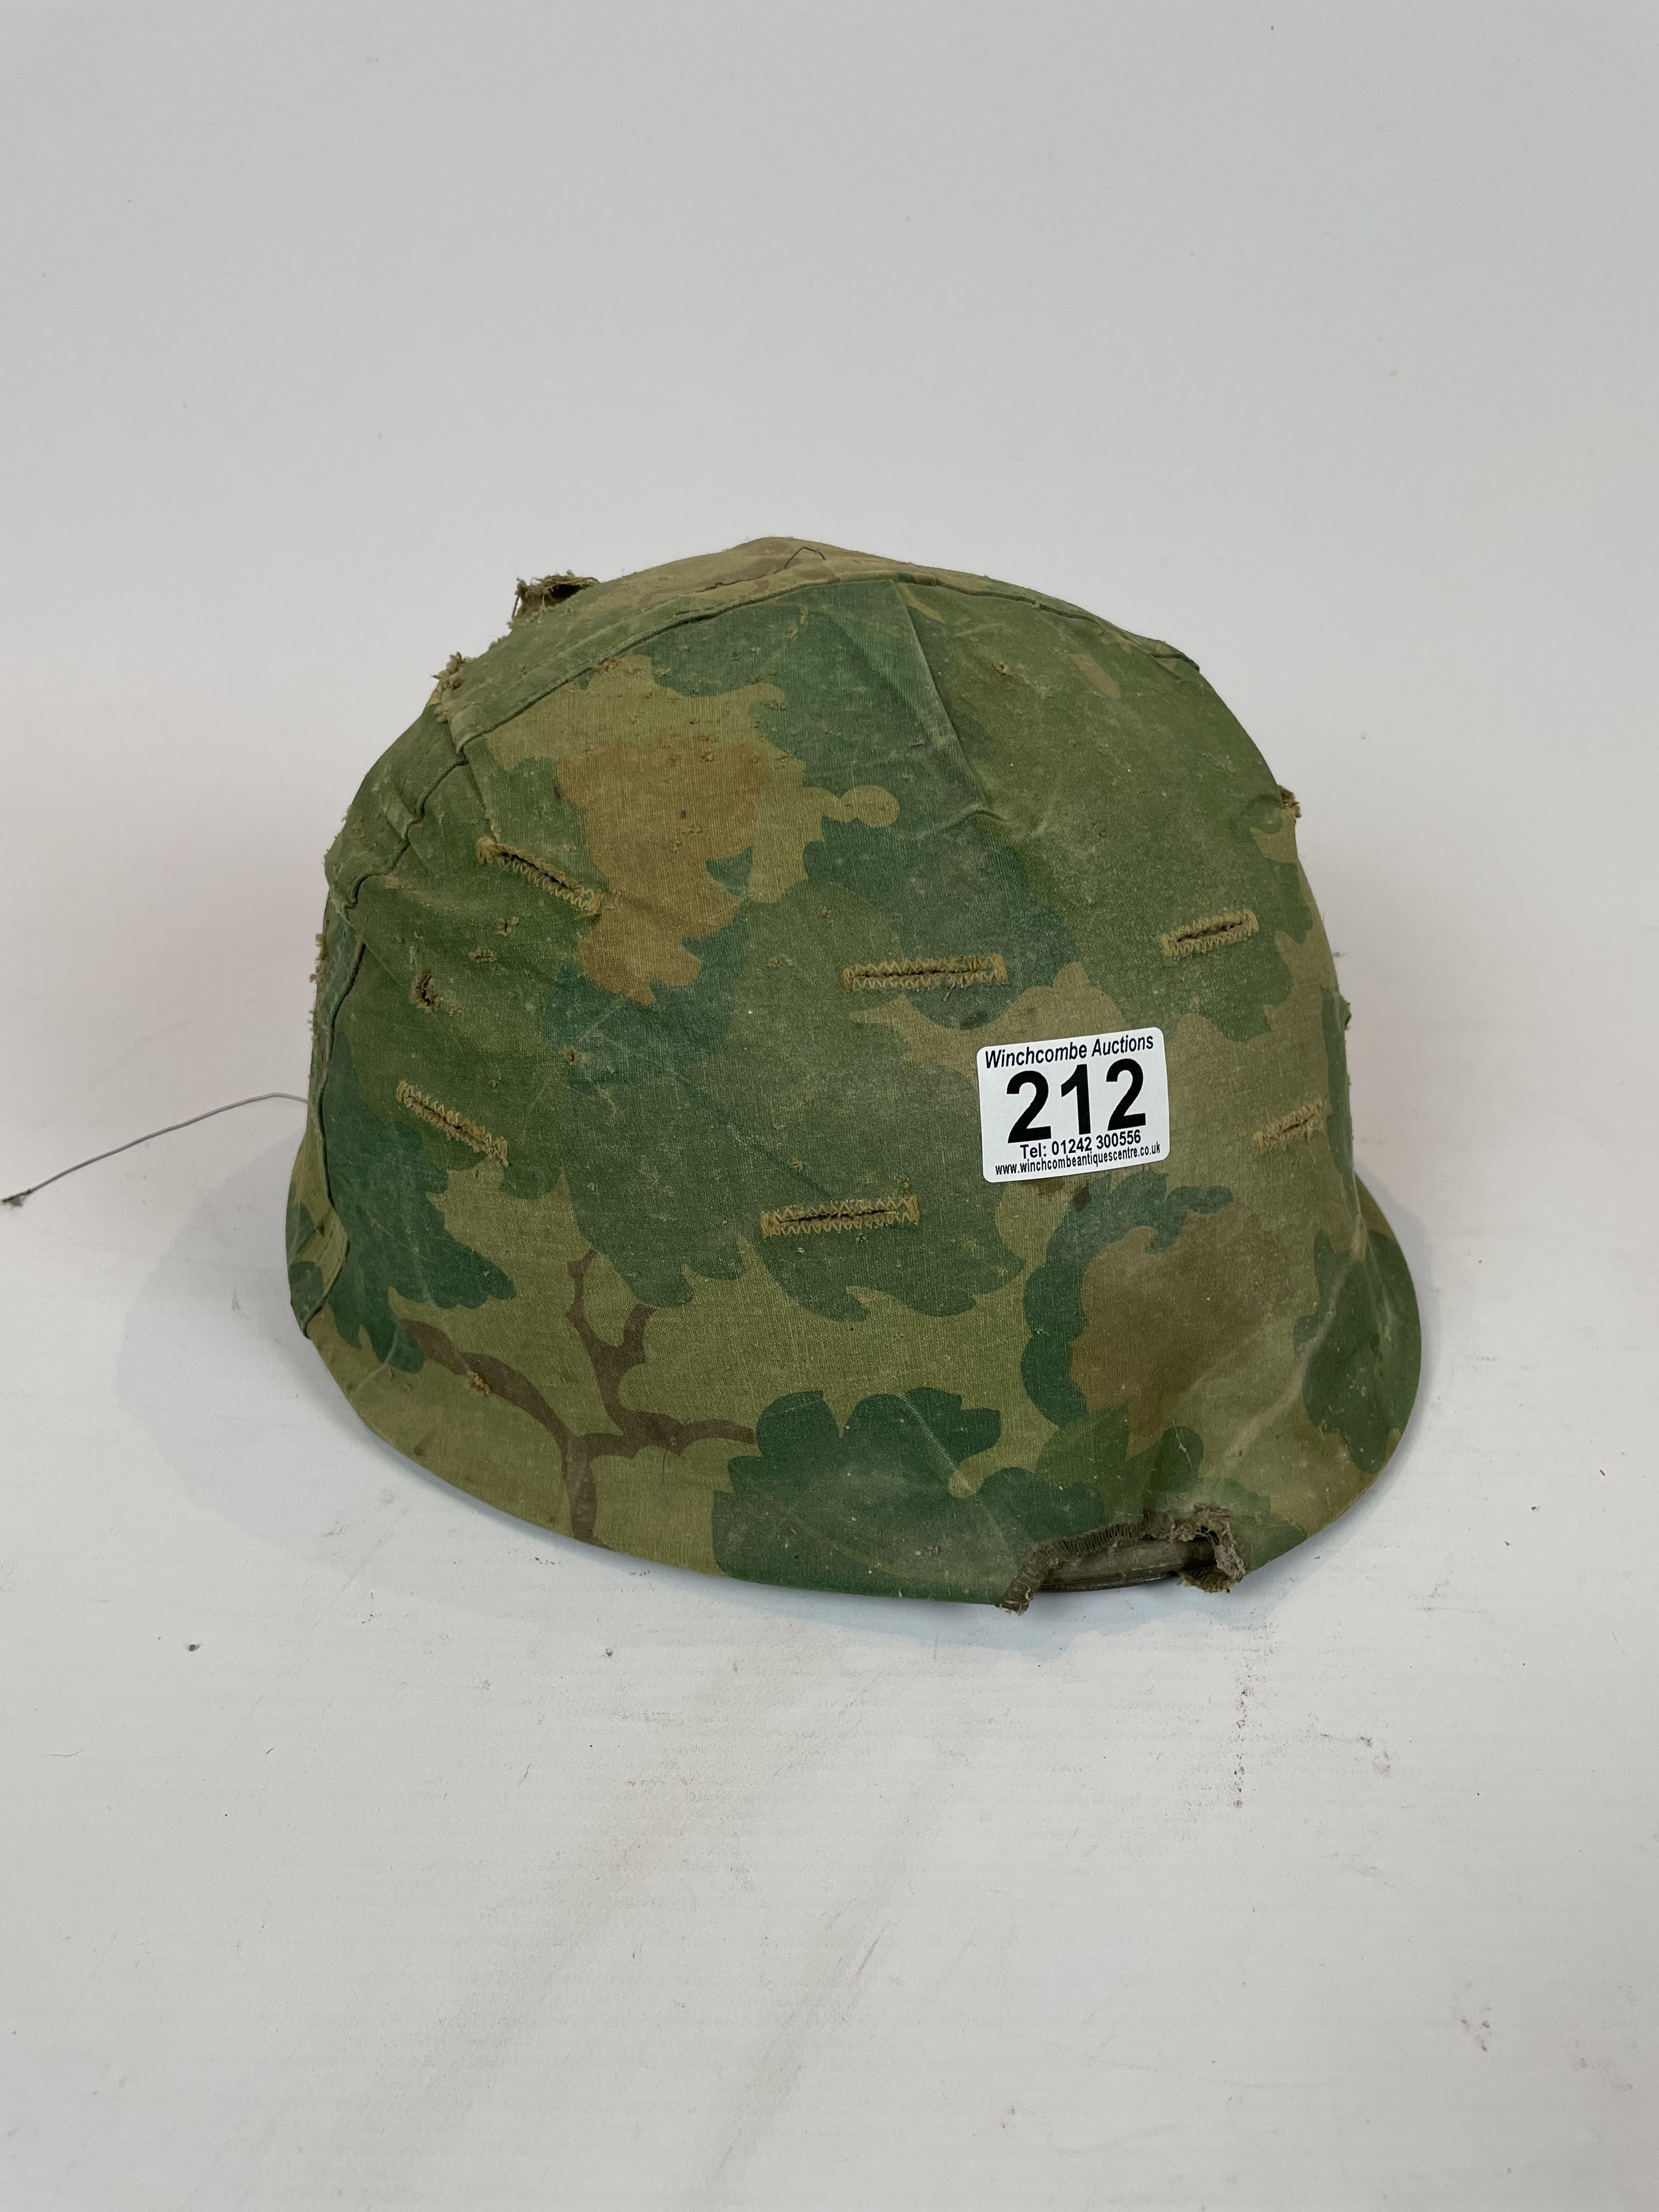 Rare U.S.A. Vietnam Army Camouflage Helmet